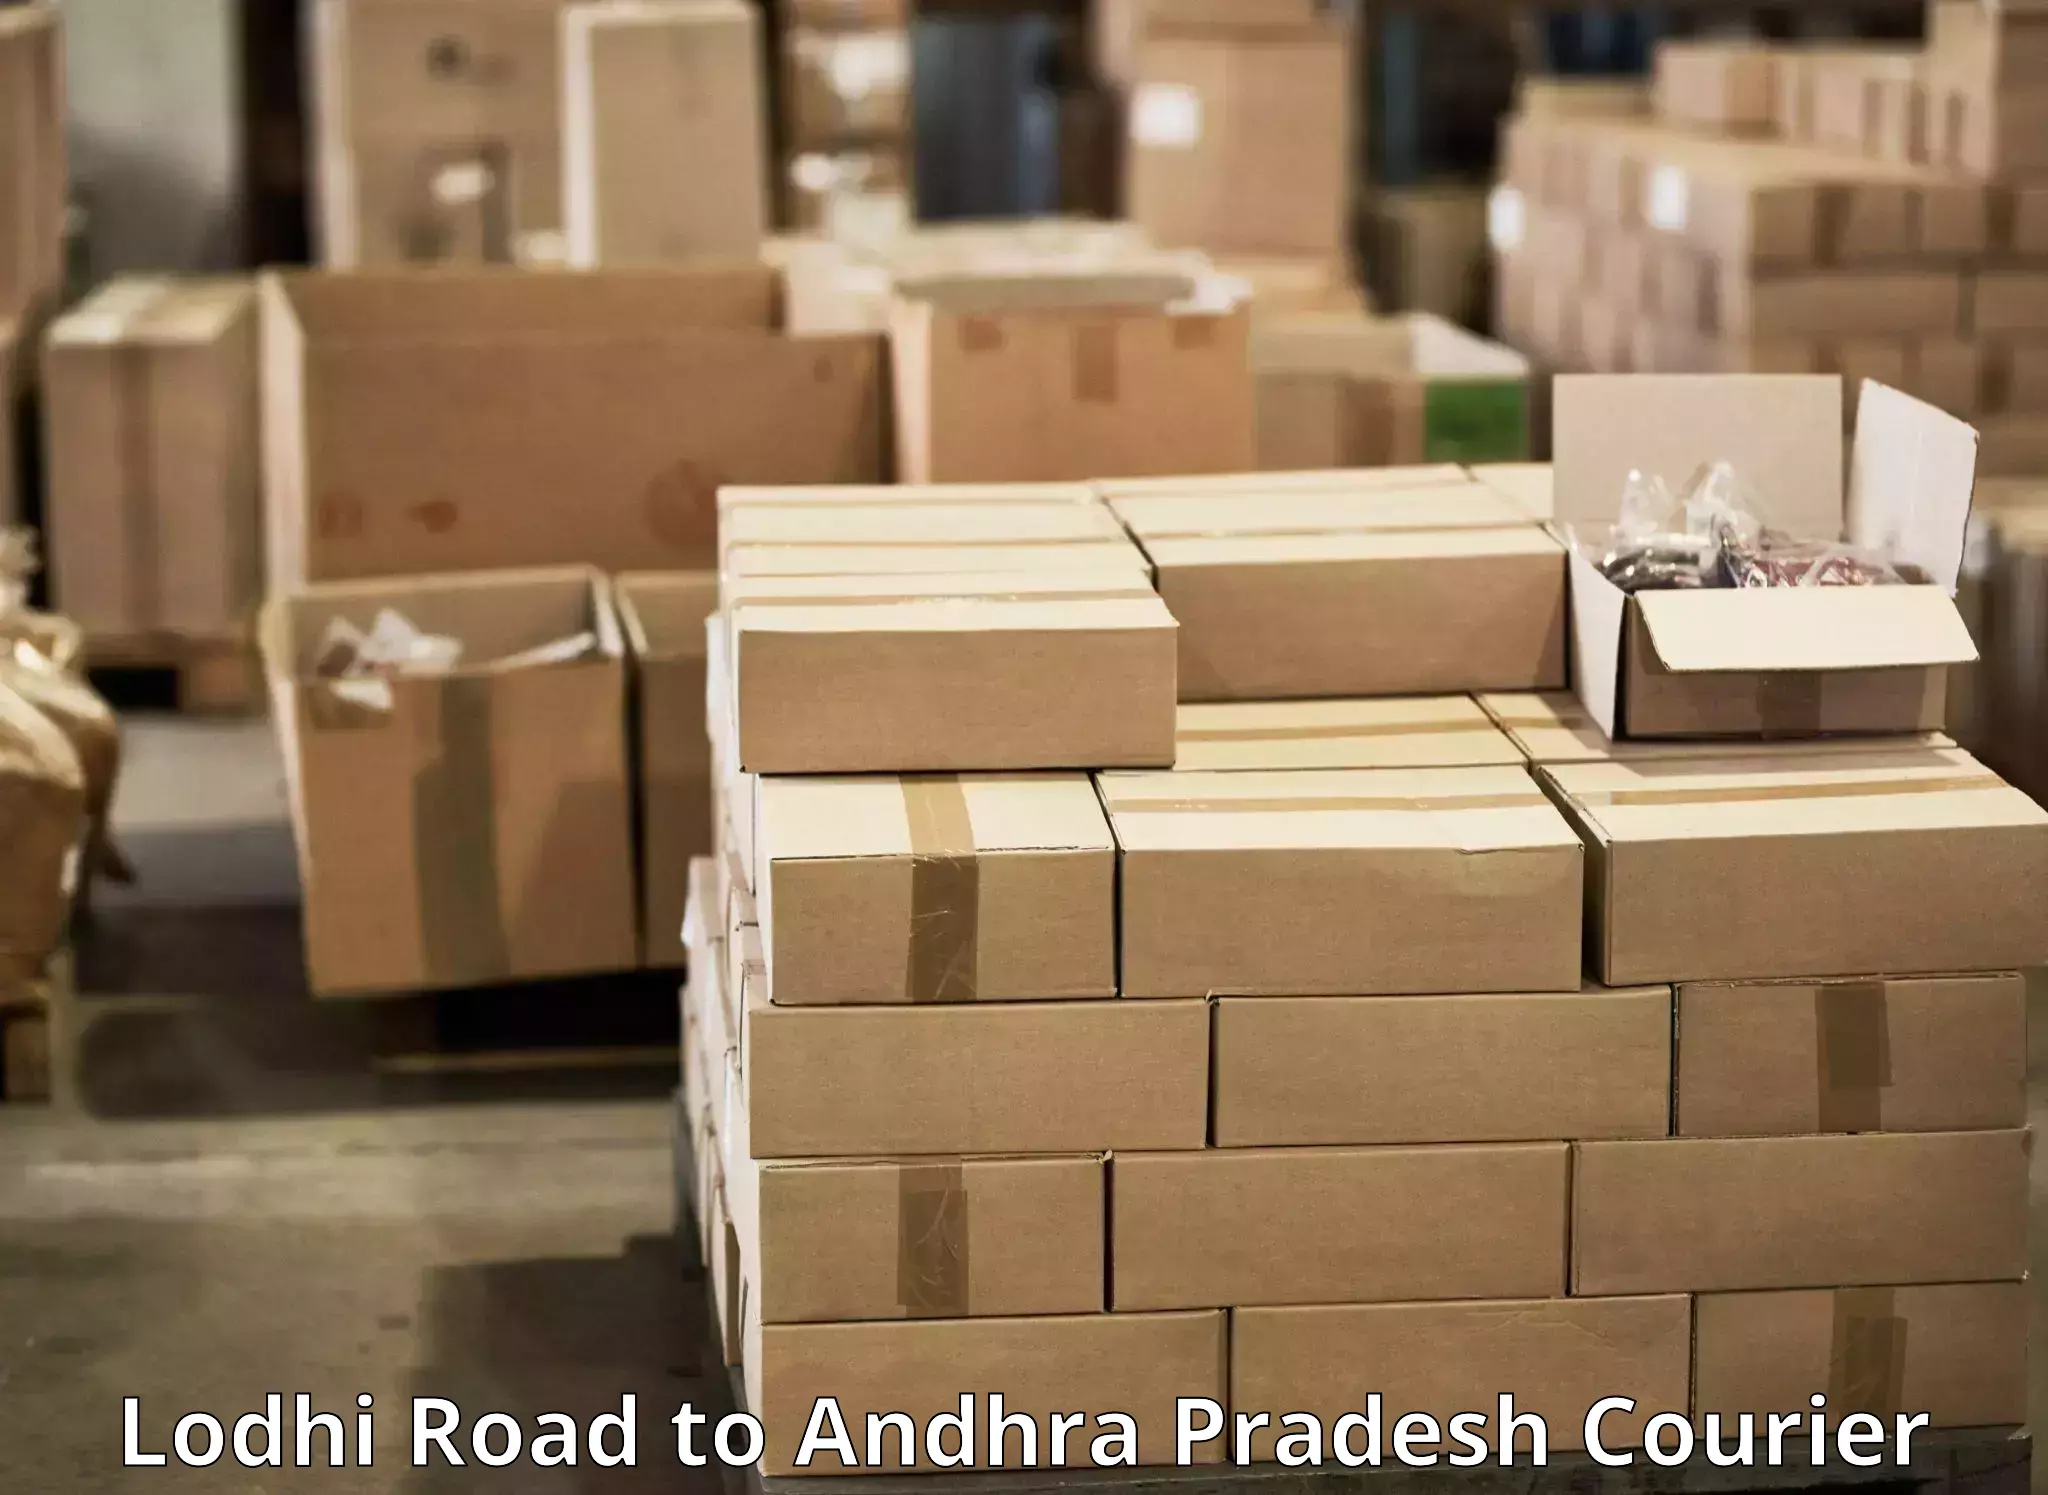 Nationwide parcel services Lodhi Road to Yerragondapalem